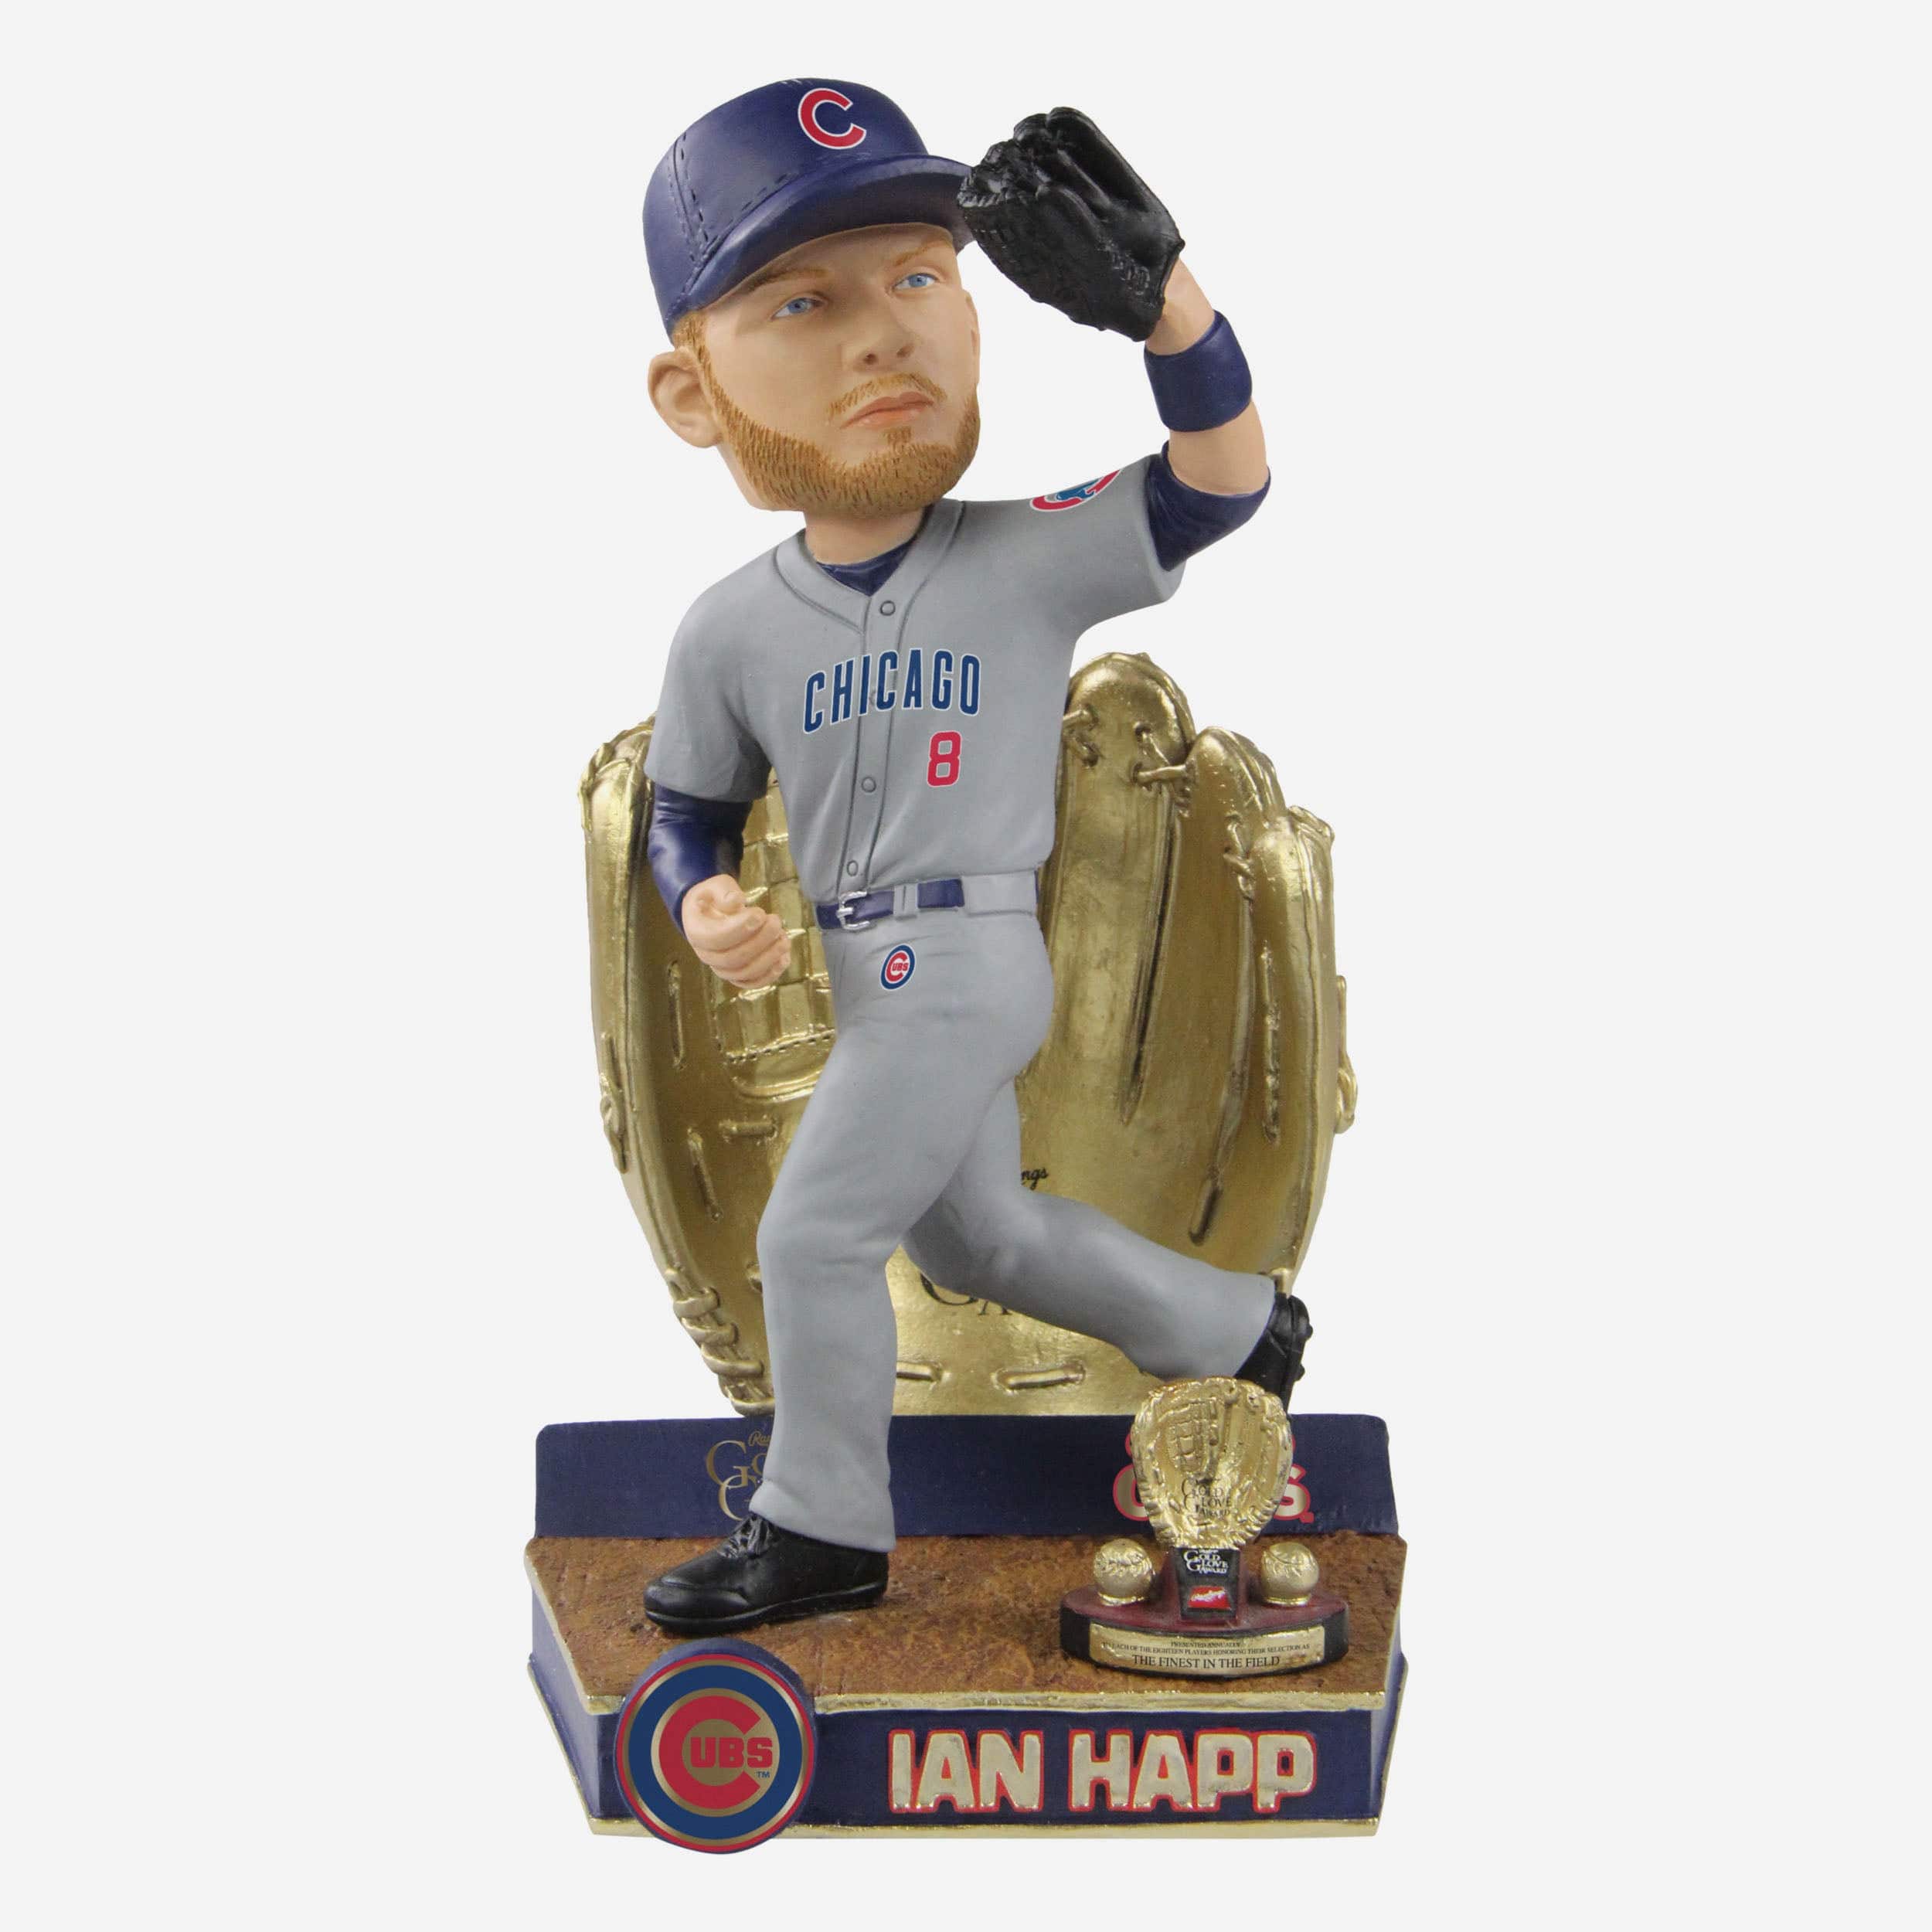 Ian Happ MLB Jersey, Baseball Jerseys, Uniforms